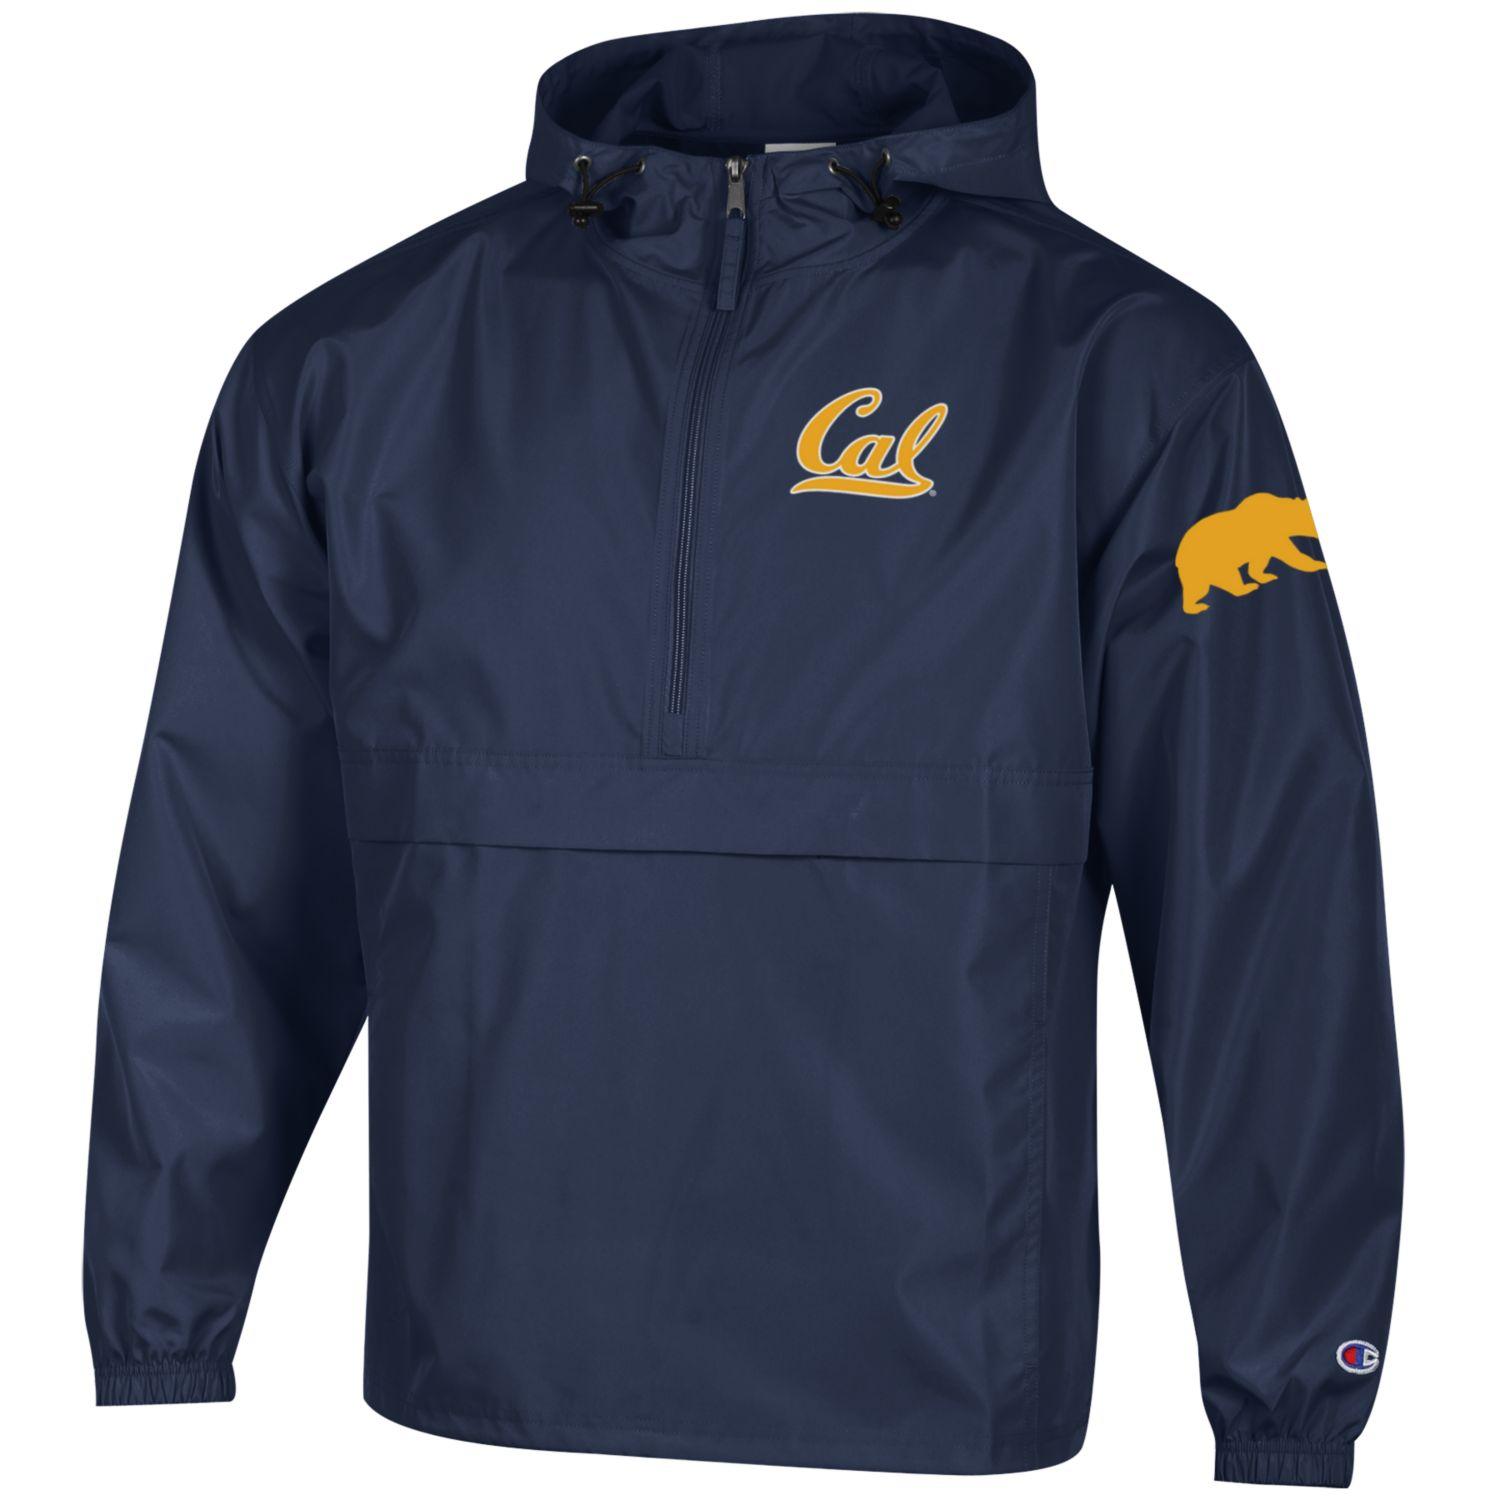 U.C. Berkeley Cal and Bear mascot 1/2 zip pack N Go nylon jacket